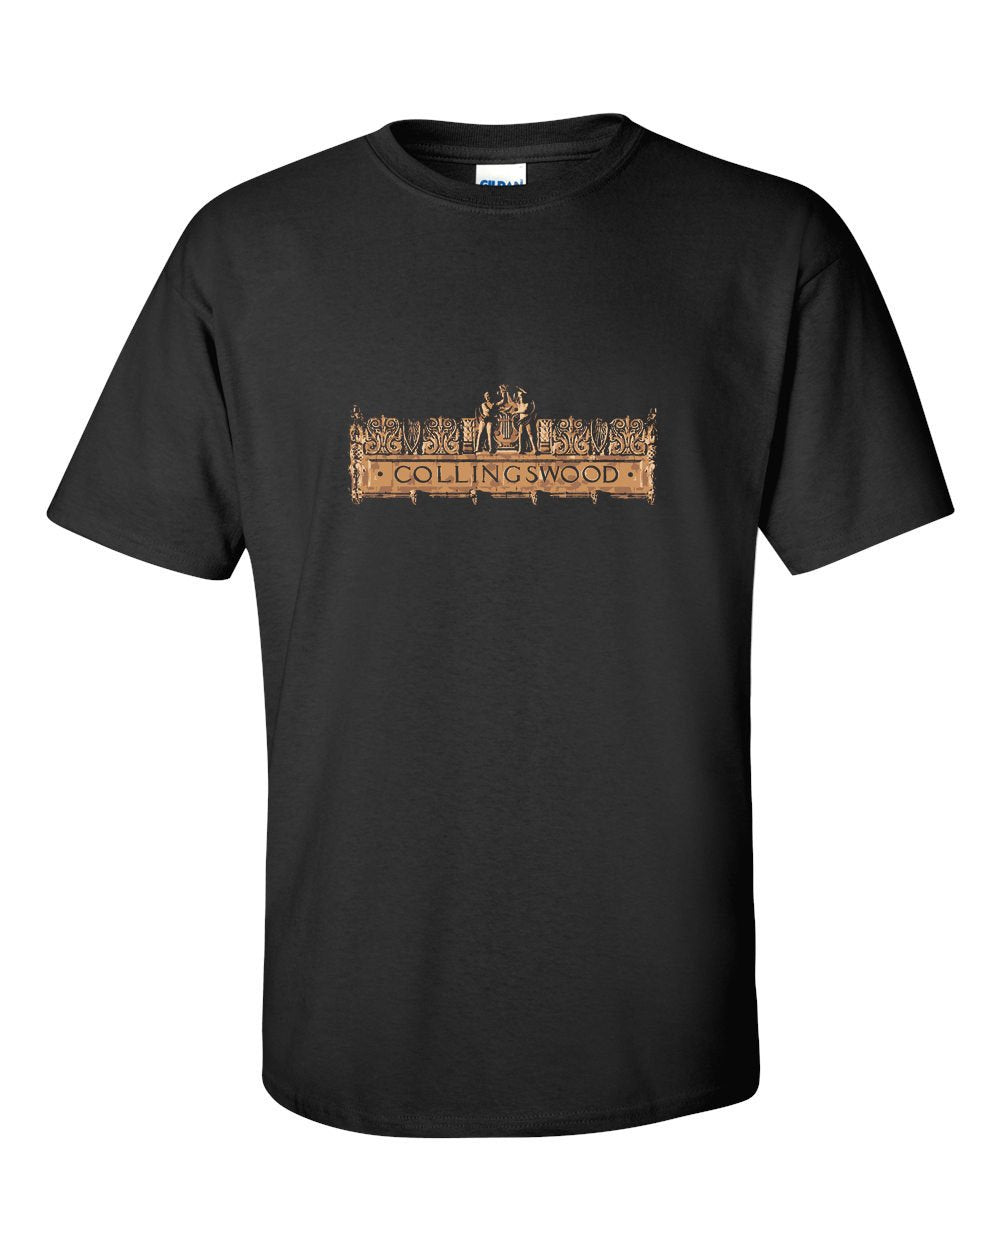 Collingswood Crest Mens/Unisex T-Shirt